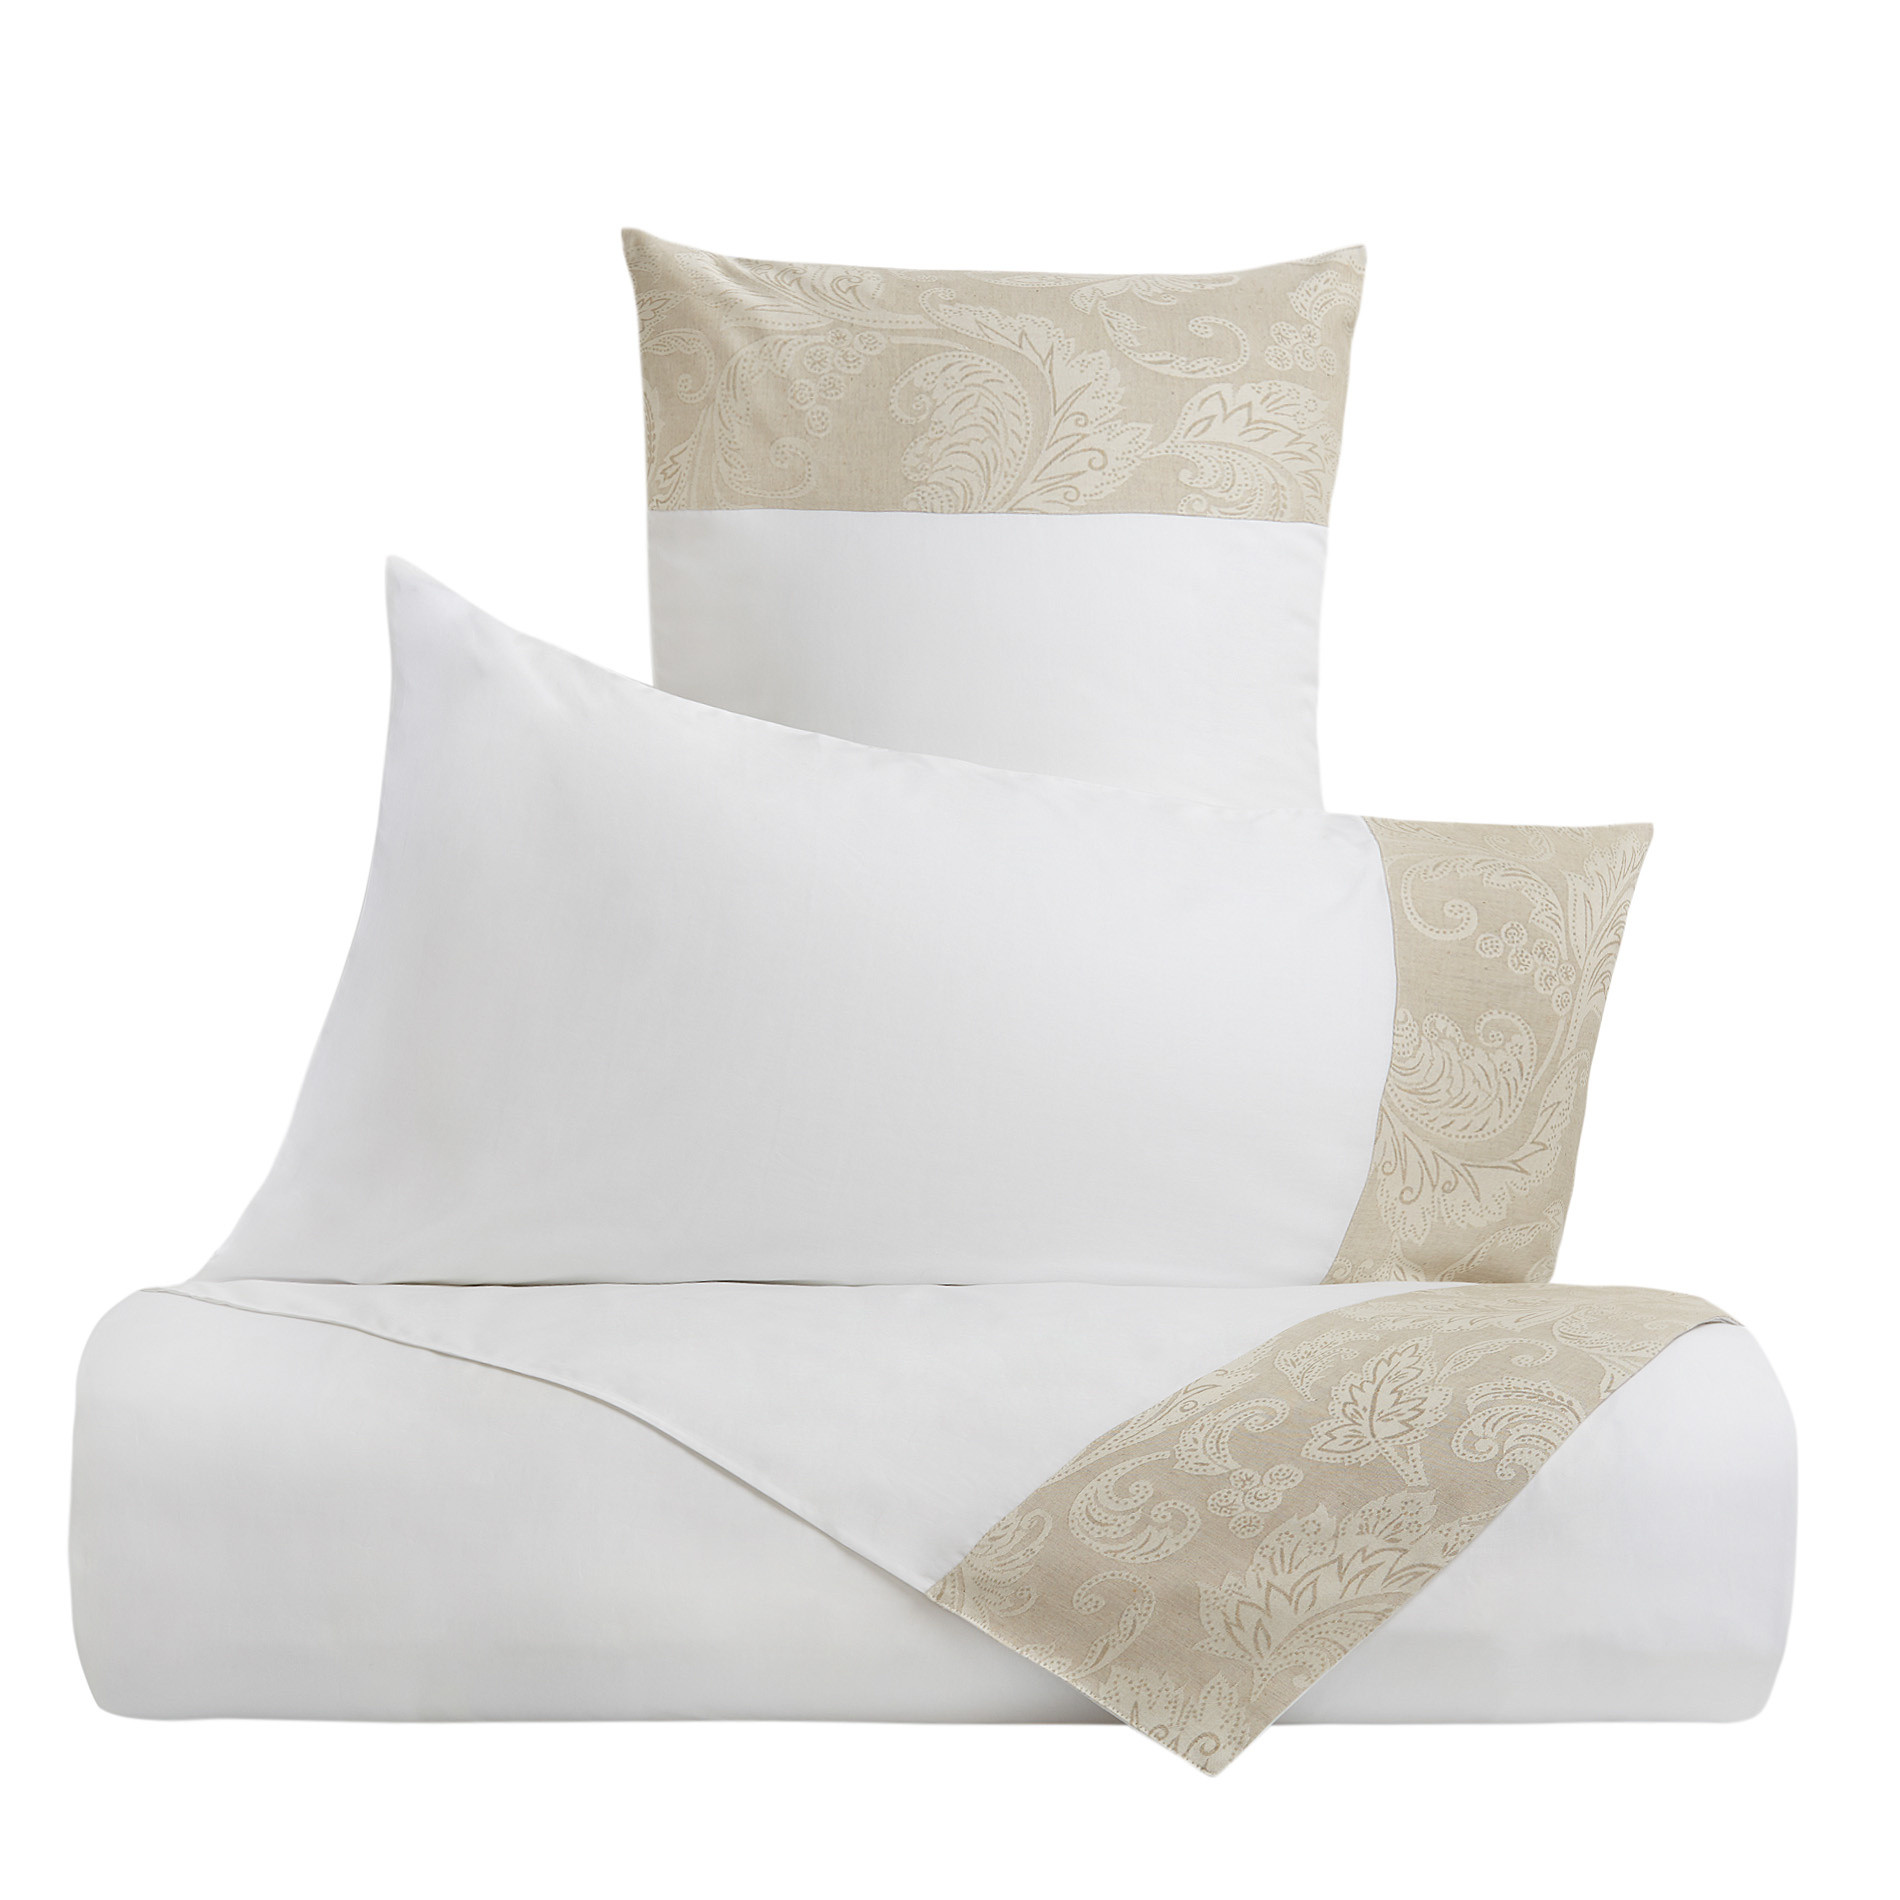 Portofino pillowcase in 100% cotton with linen trim, White, large image number 2